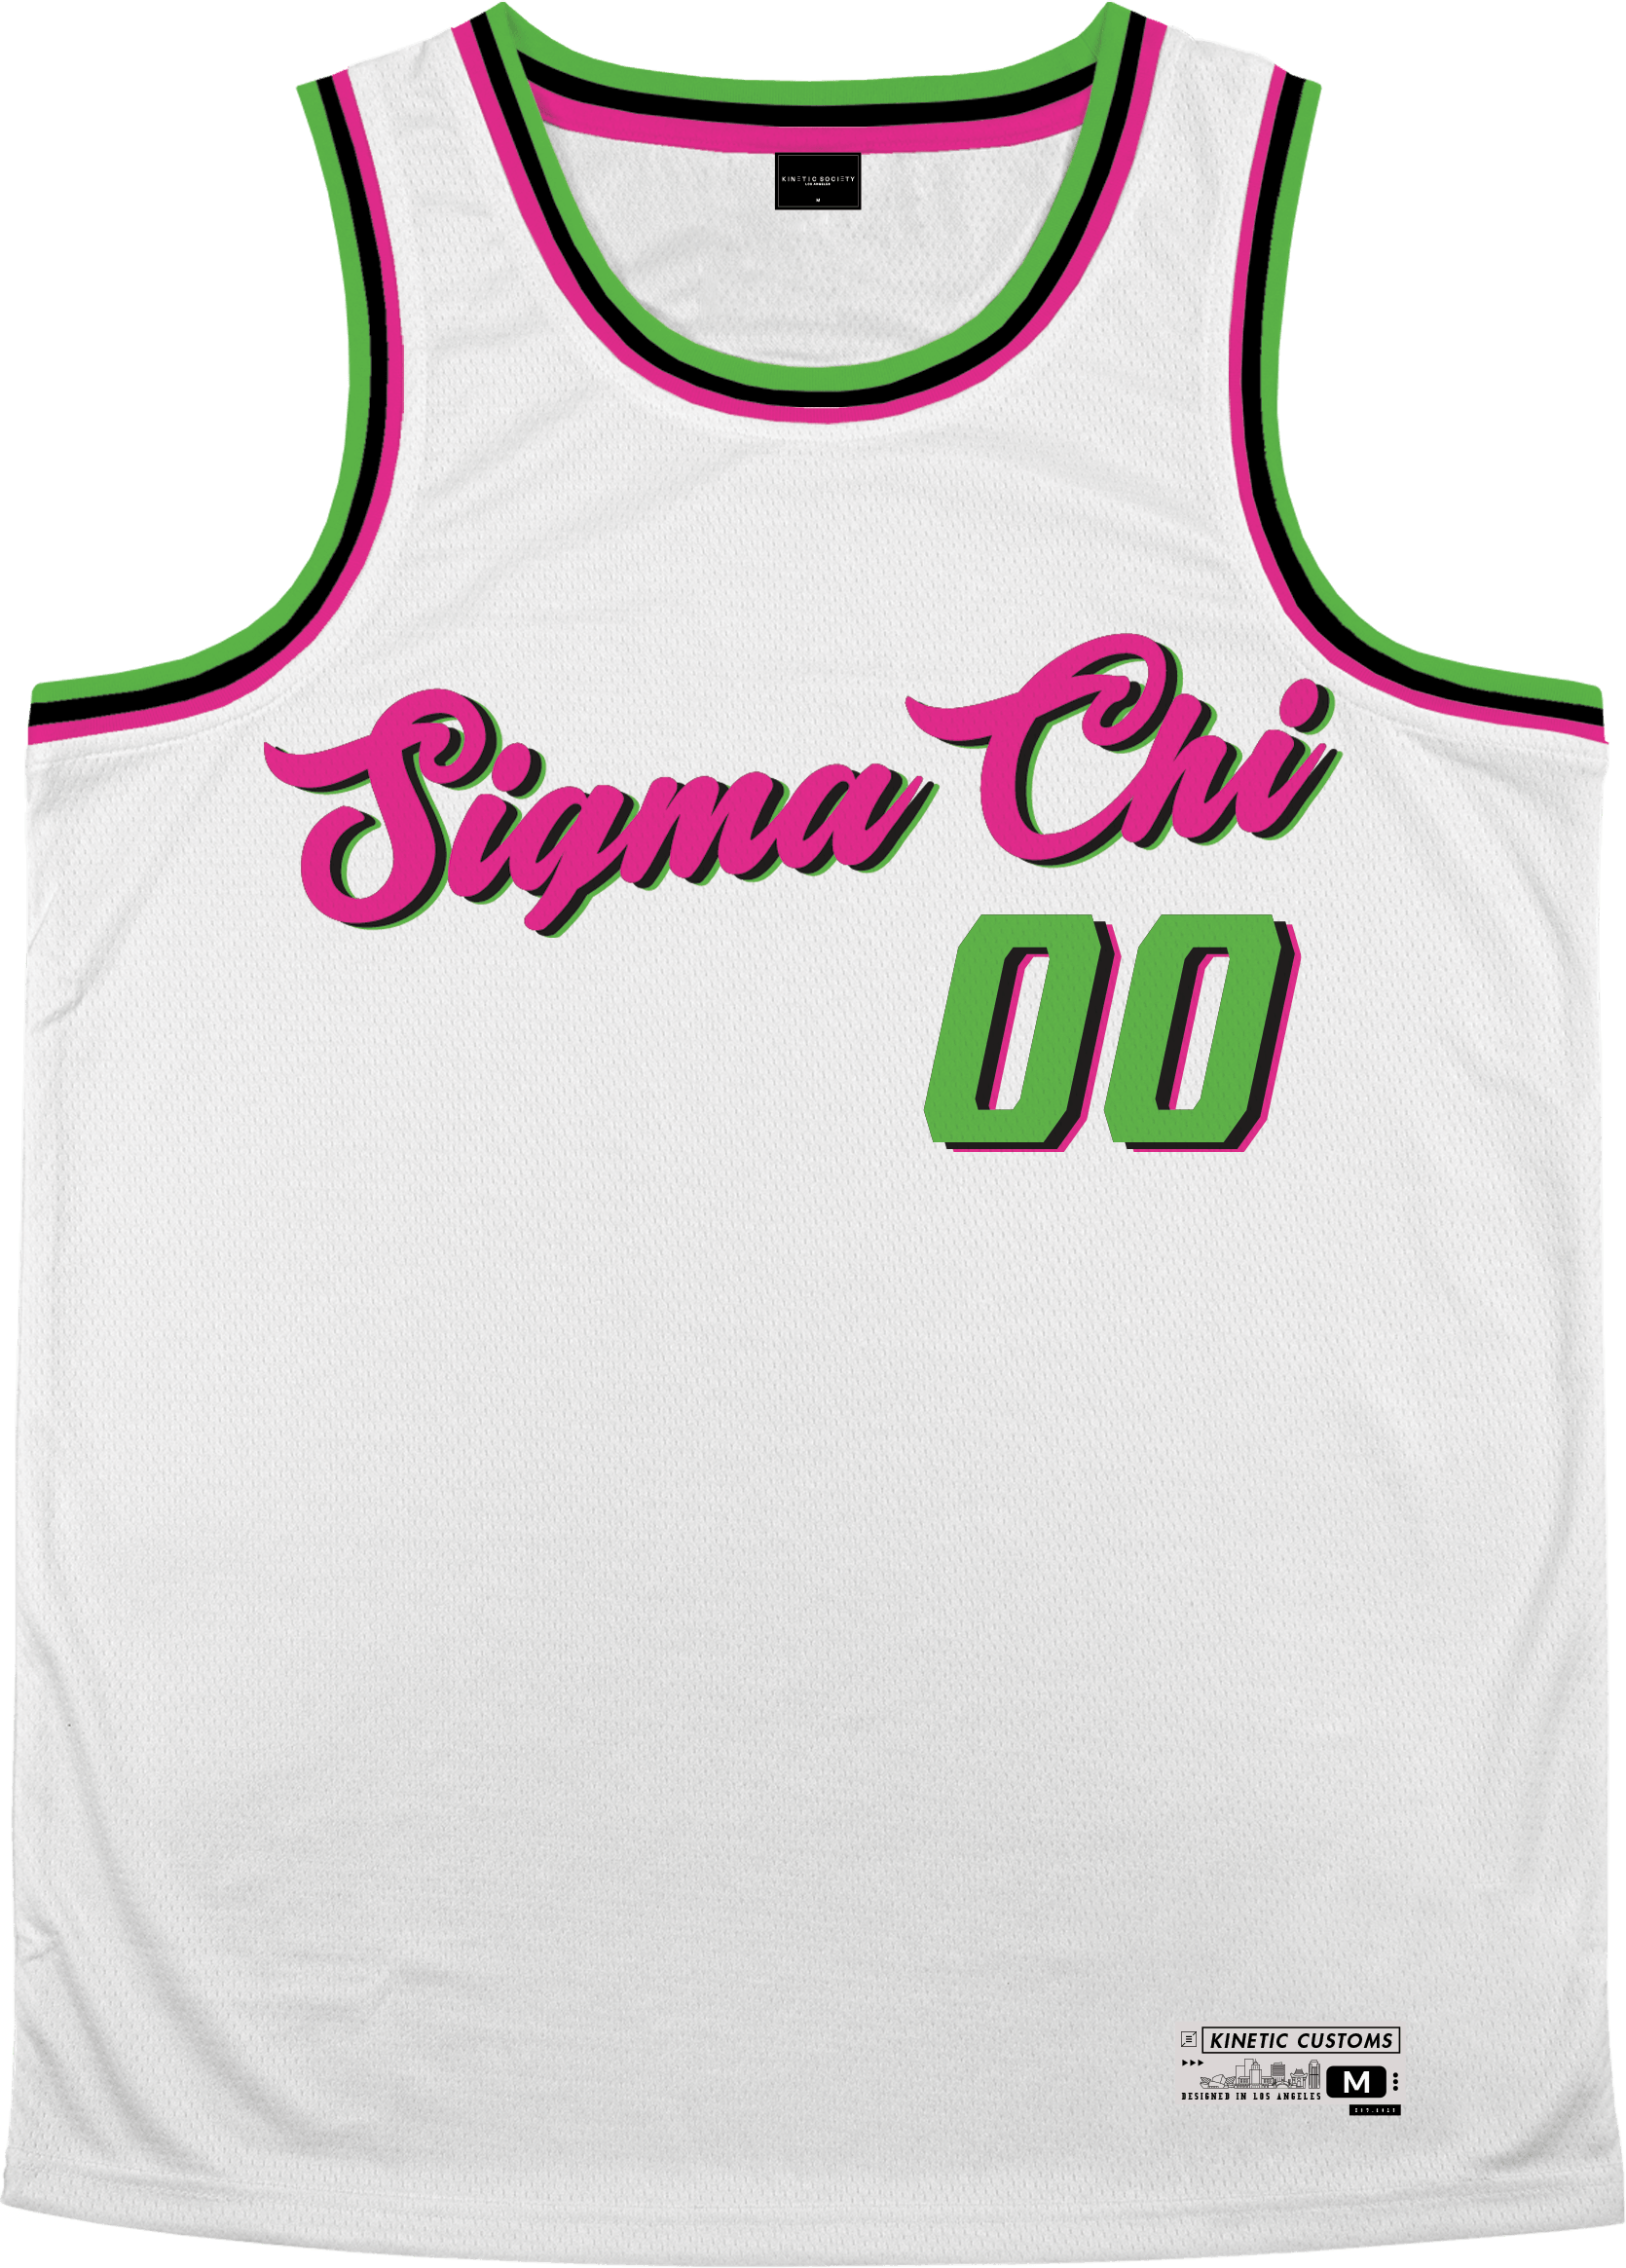 Sigma Chi - Bubble Gum Basketball Jersey Premium Basketball Kinetic Society LLC 